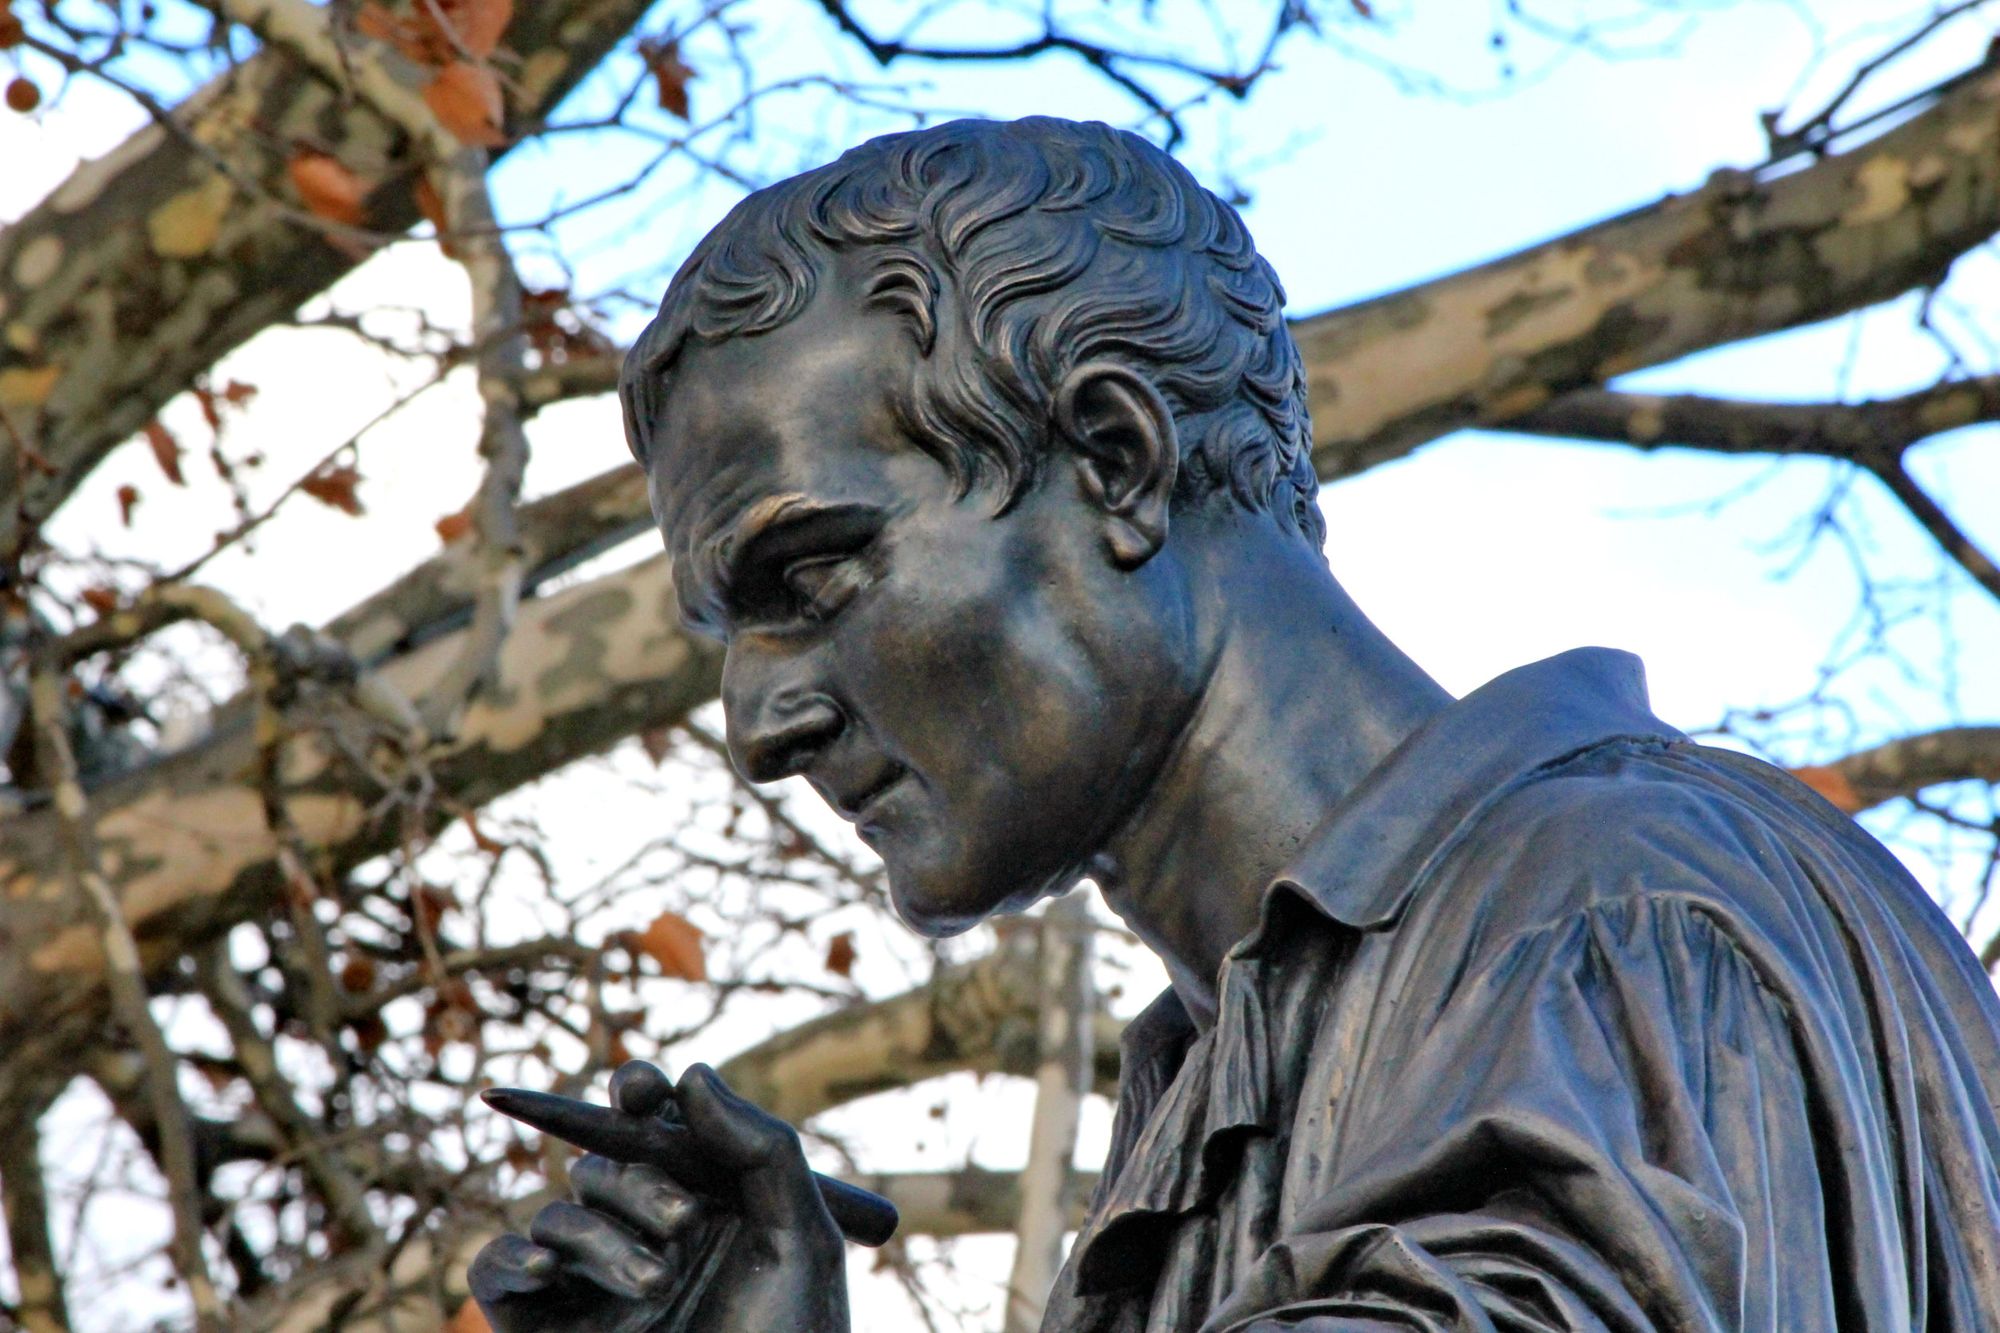 A statue of Jean Jacques Rousseau in Geneva, Switzerland